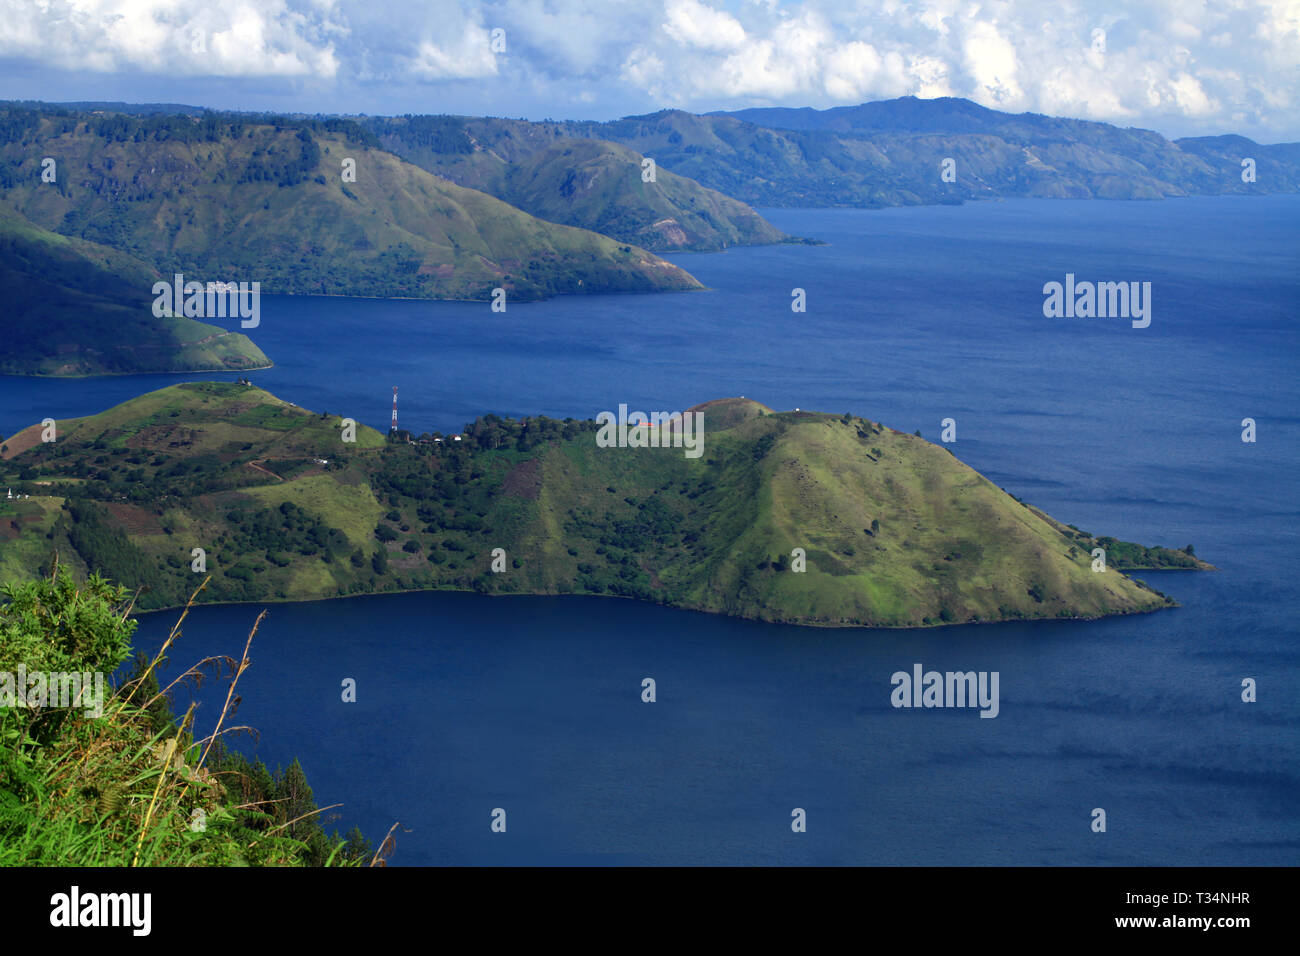 Lake Toba, North Sumatra, Indonesia Stock Photo